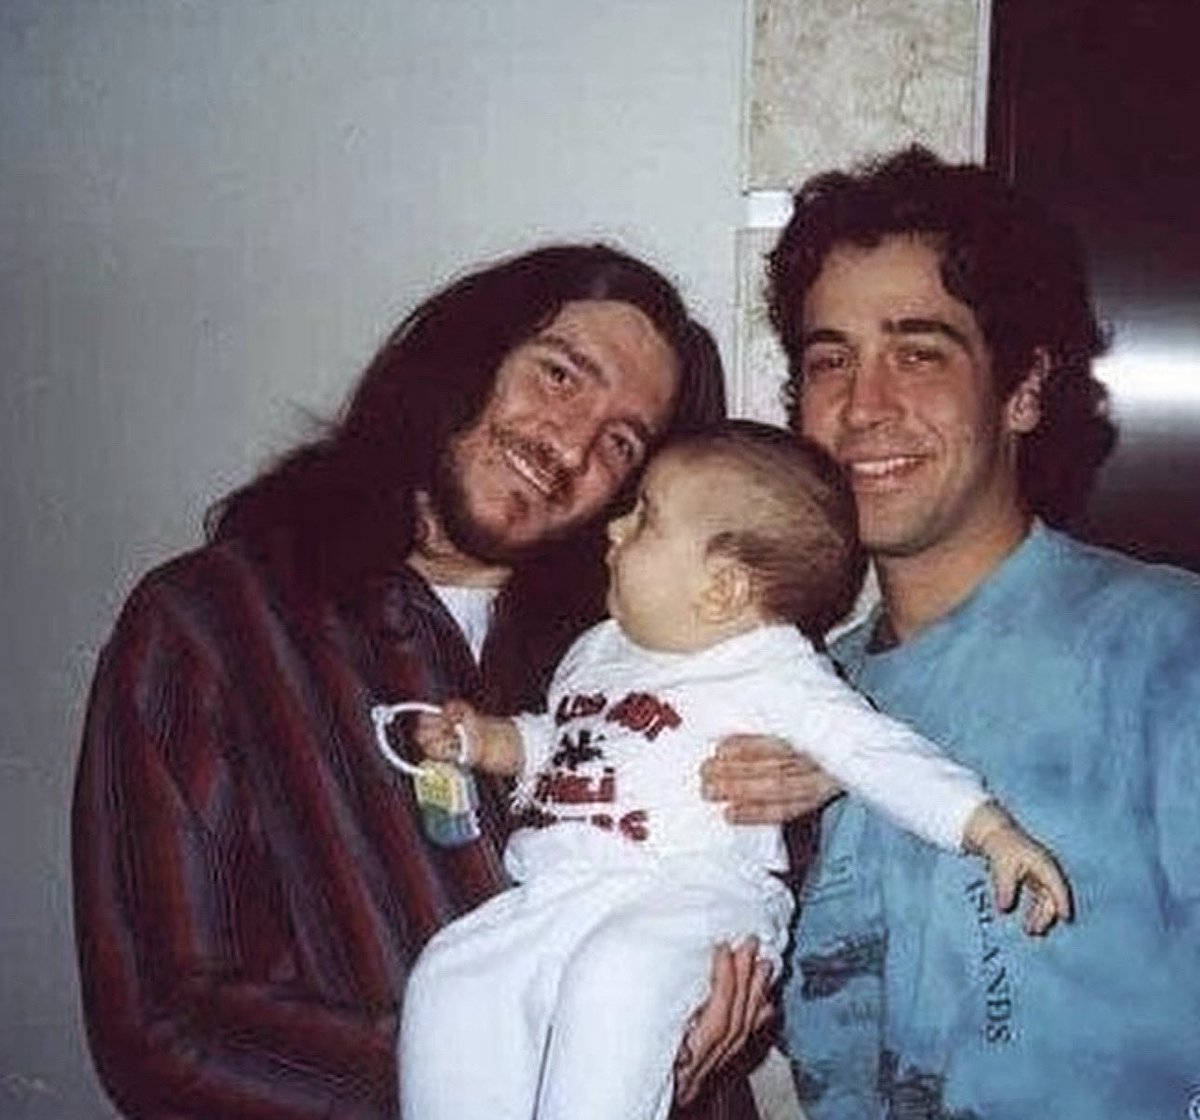 A cute guy holding a cute baby 
👠lyra4m.com/johnfrusciante…

#johnfrusciante #レッドホットチリペッパーズ #cute #baby